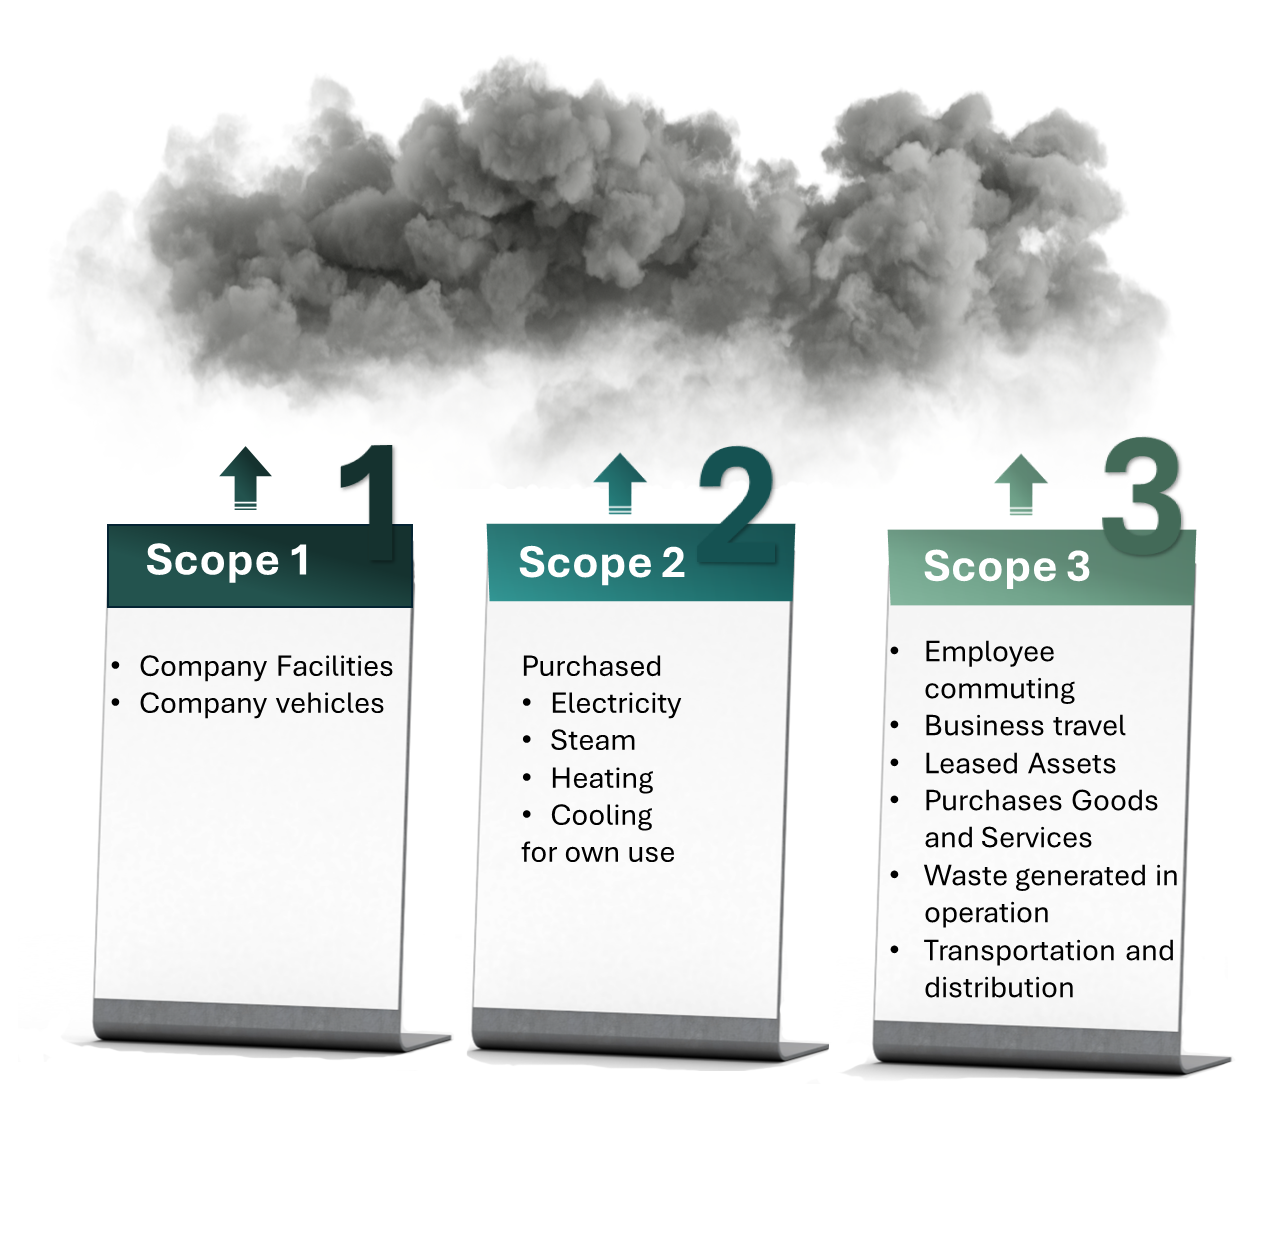 scope 1-3 explained for data centre sustainability improvements.